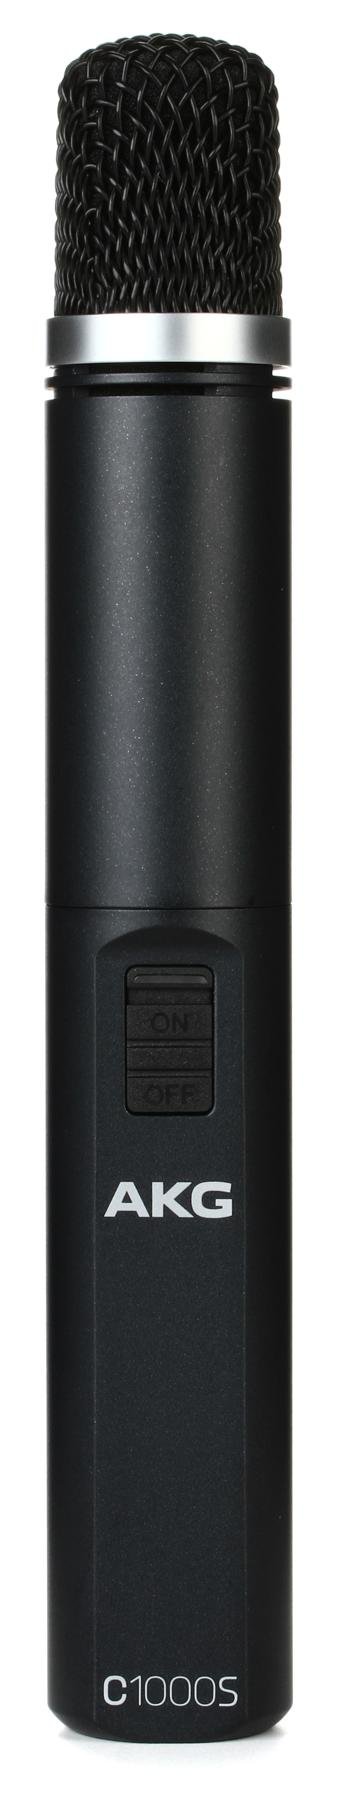 Guggenheim Museum Onweersbui Normalisatie AKG C1000 S MK4 Small-diaphragm Condenser Microphone | Sweetwater